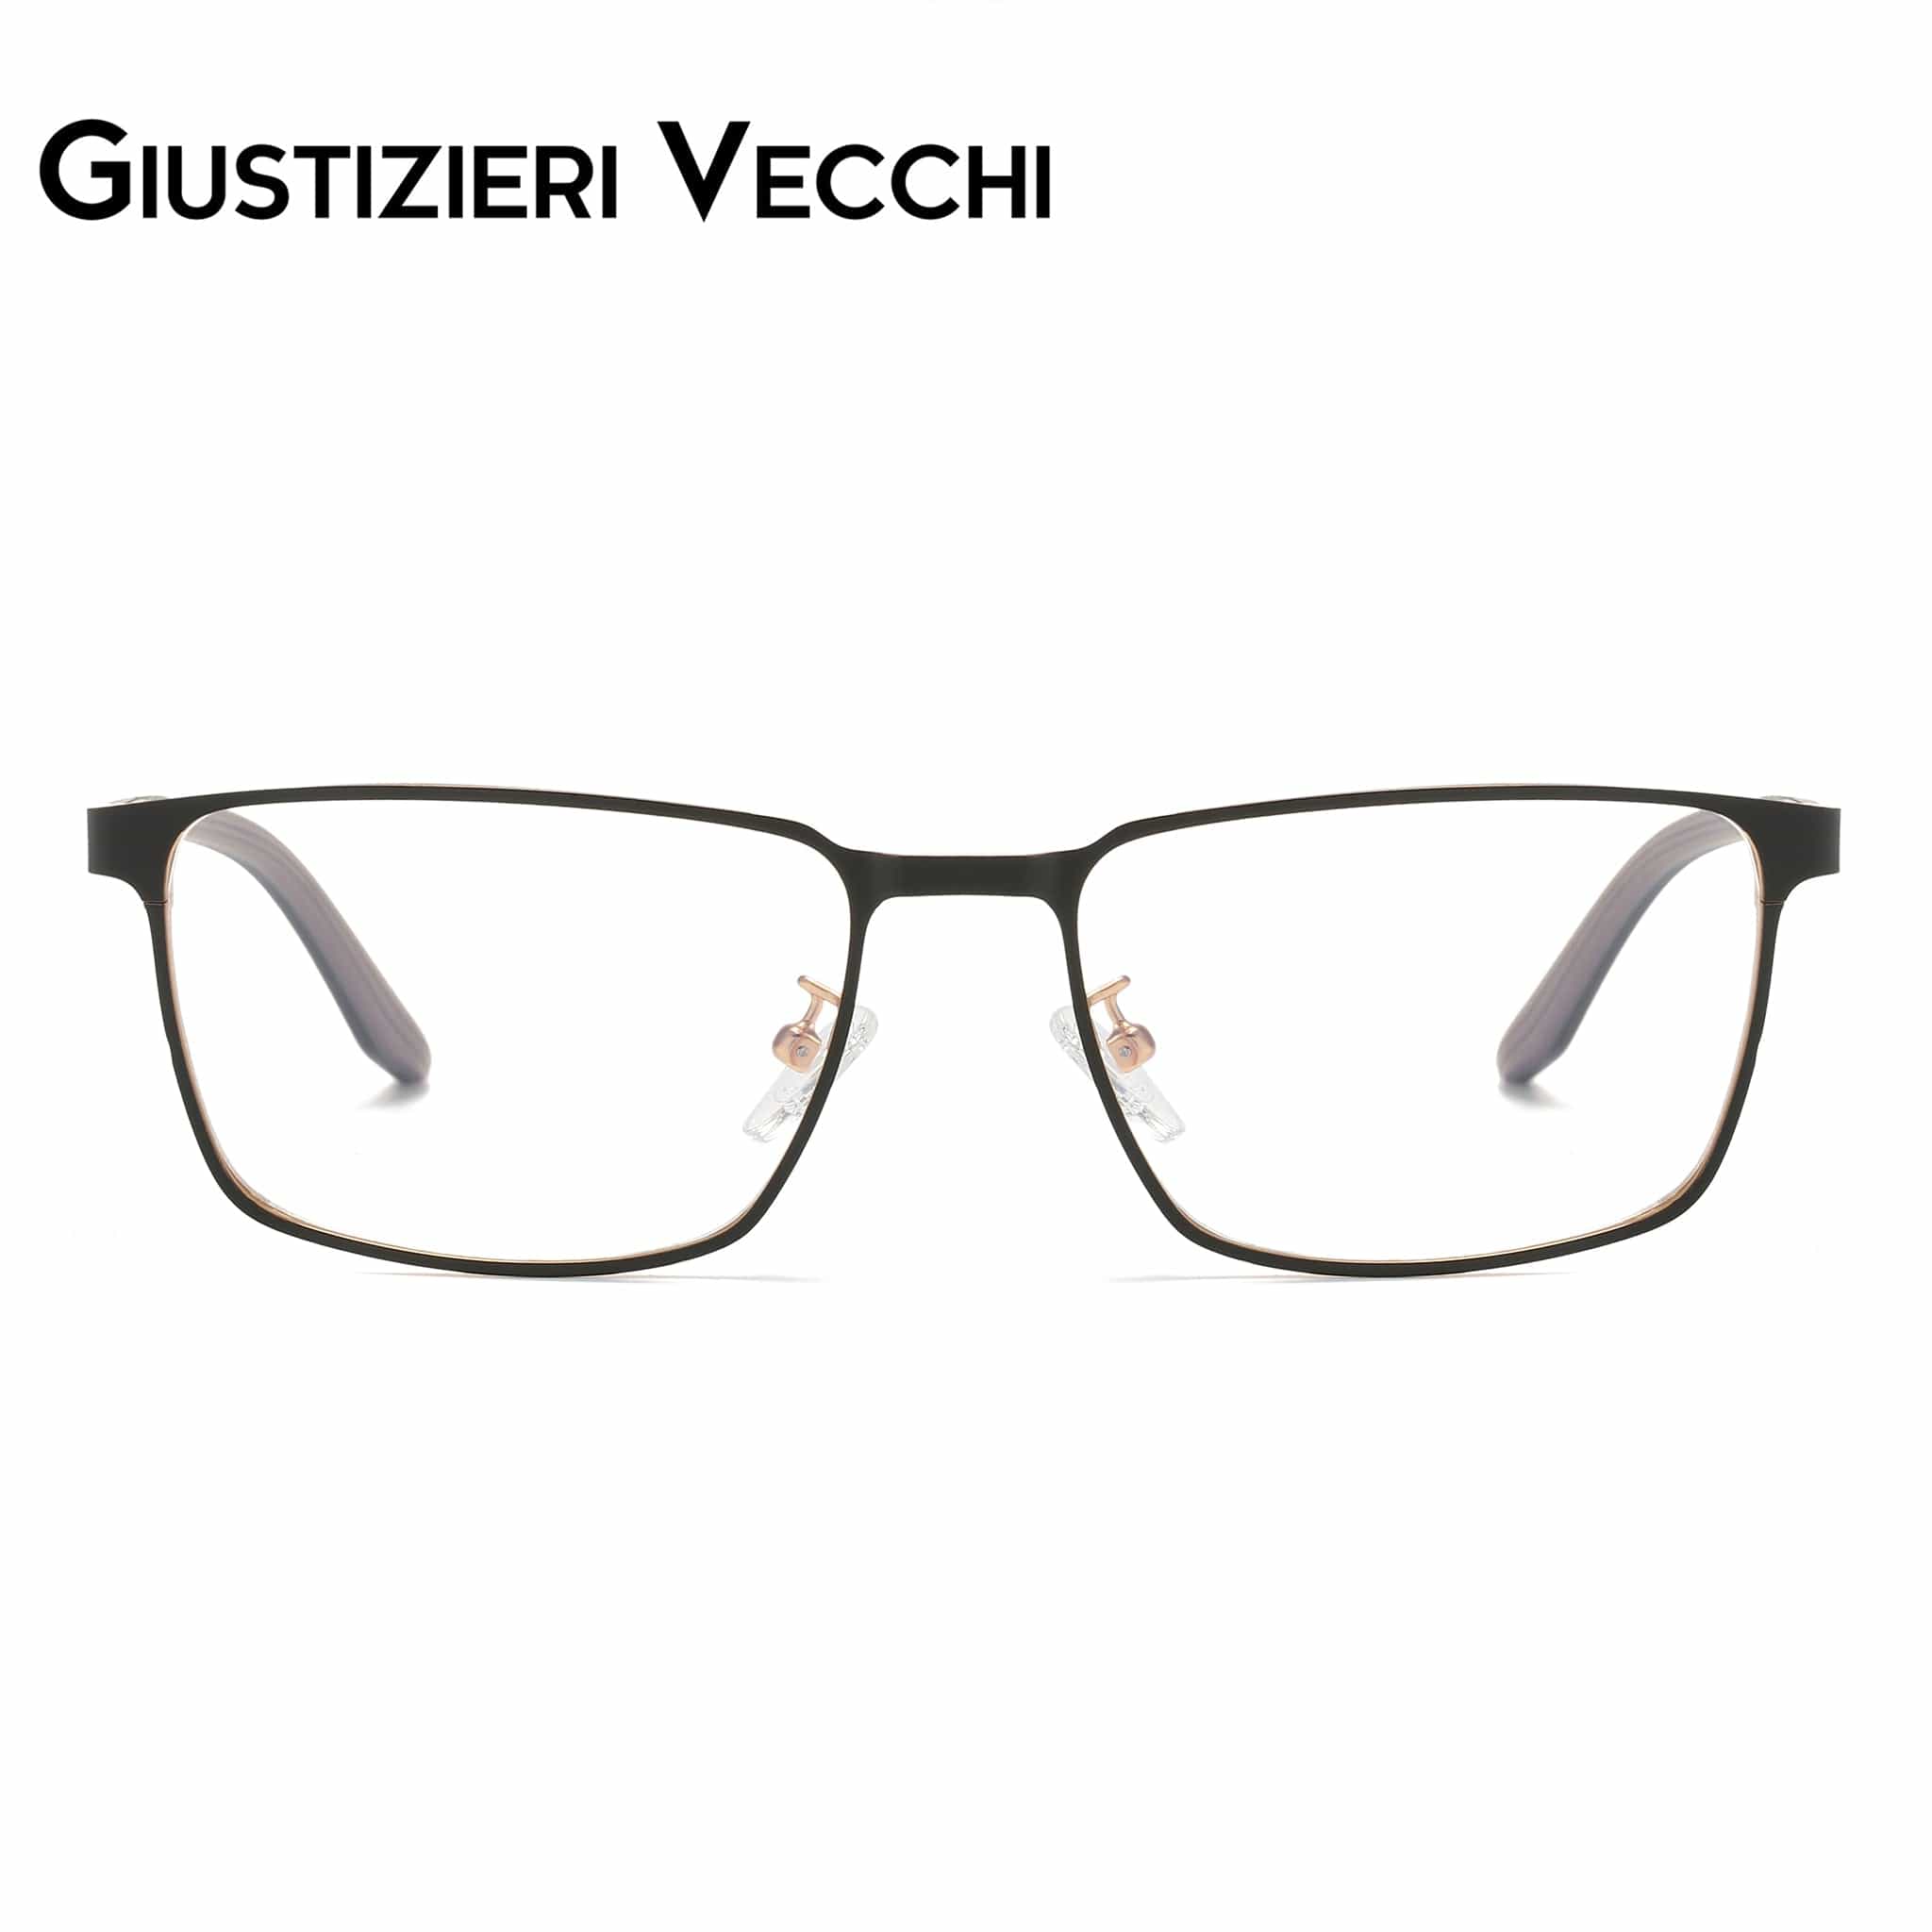 GIUSTIZIERI VECCHI Eyeglasses Black with Brown / Large IceSurf Uno